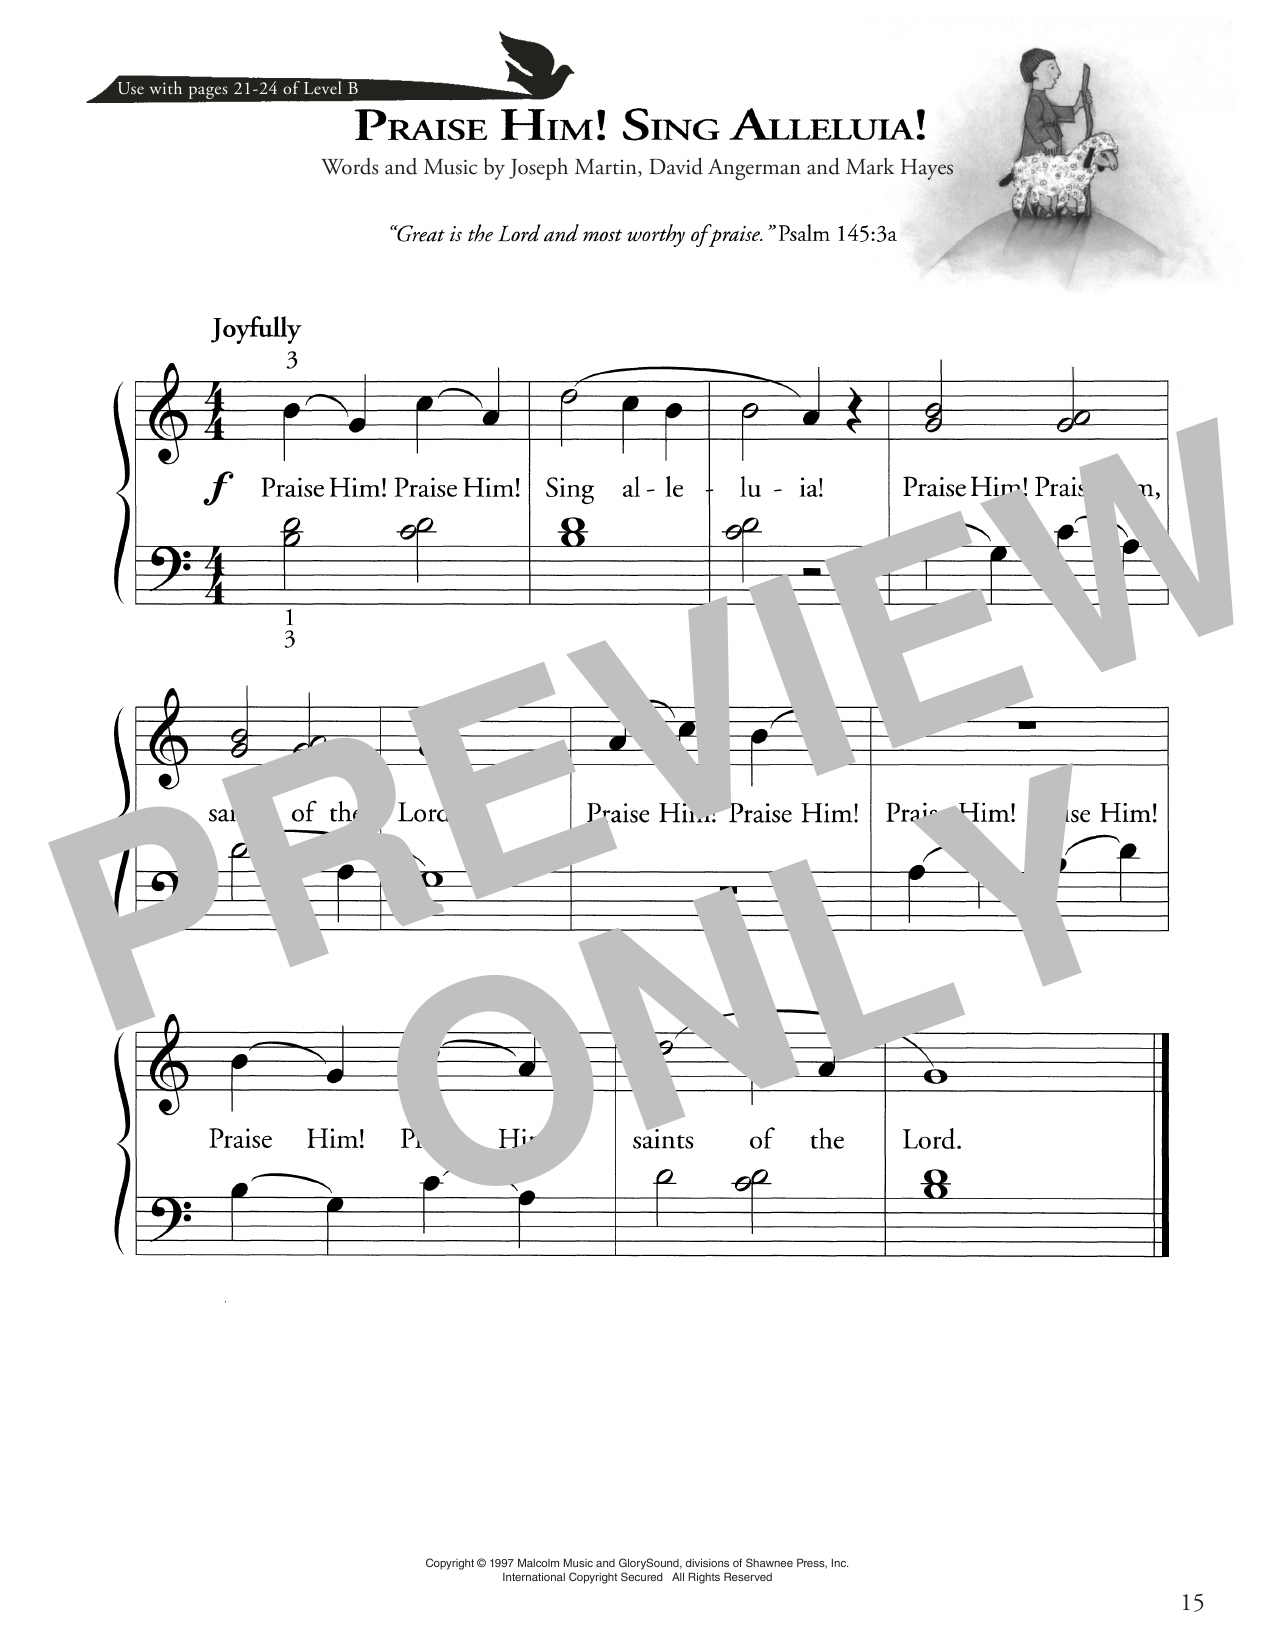 Joseph Martin, David Angerman and Mark Hayes Praise Him! Sing Alleluia! Sheet Music Notes & Chords for Piano Method - Download or Print PDF